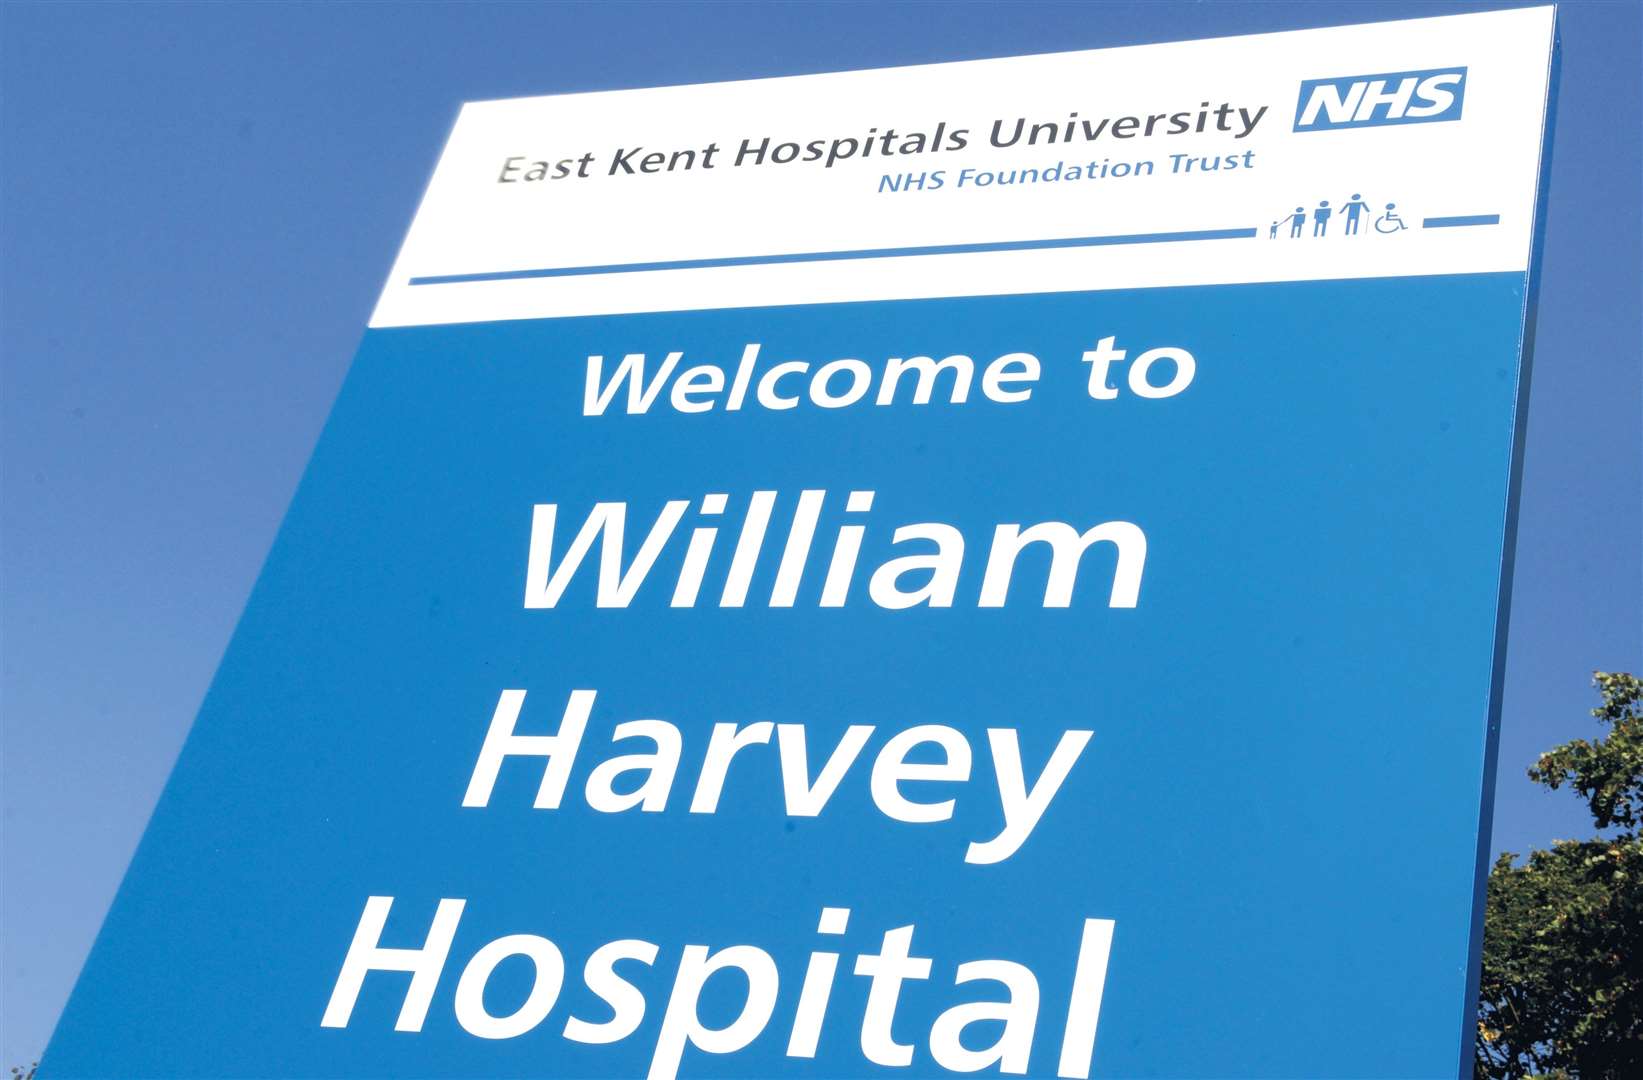 The William Harvey Hospital in Ashford, run by East Kent Hospitals University NHS Foundation Trust